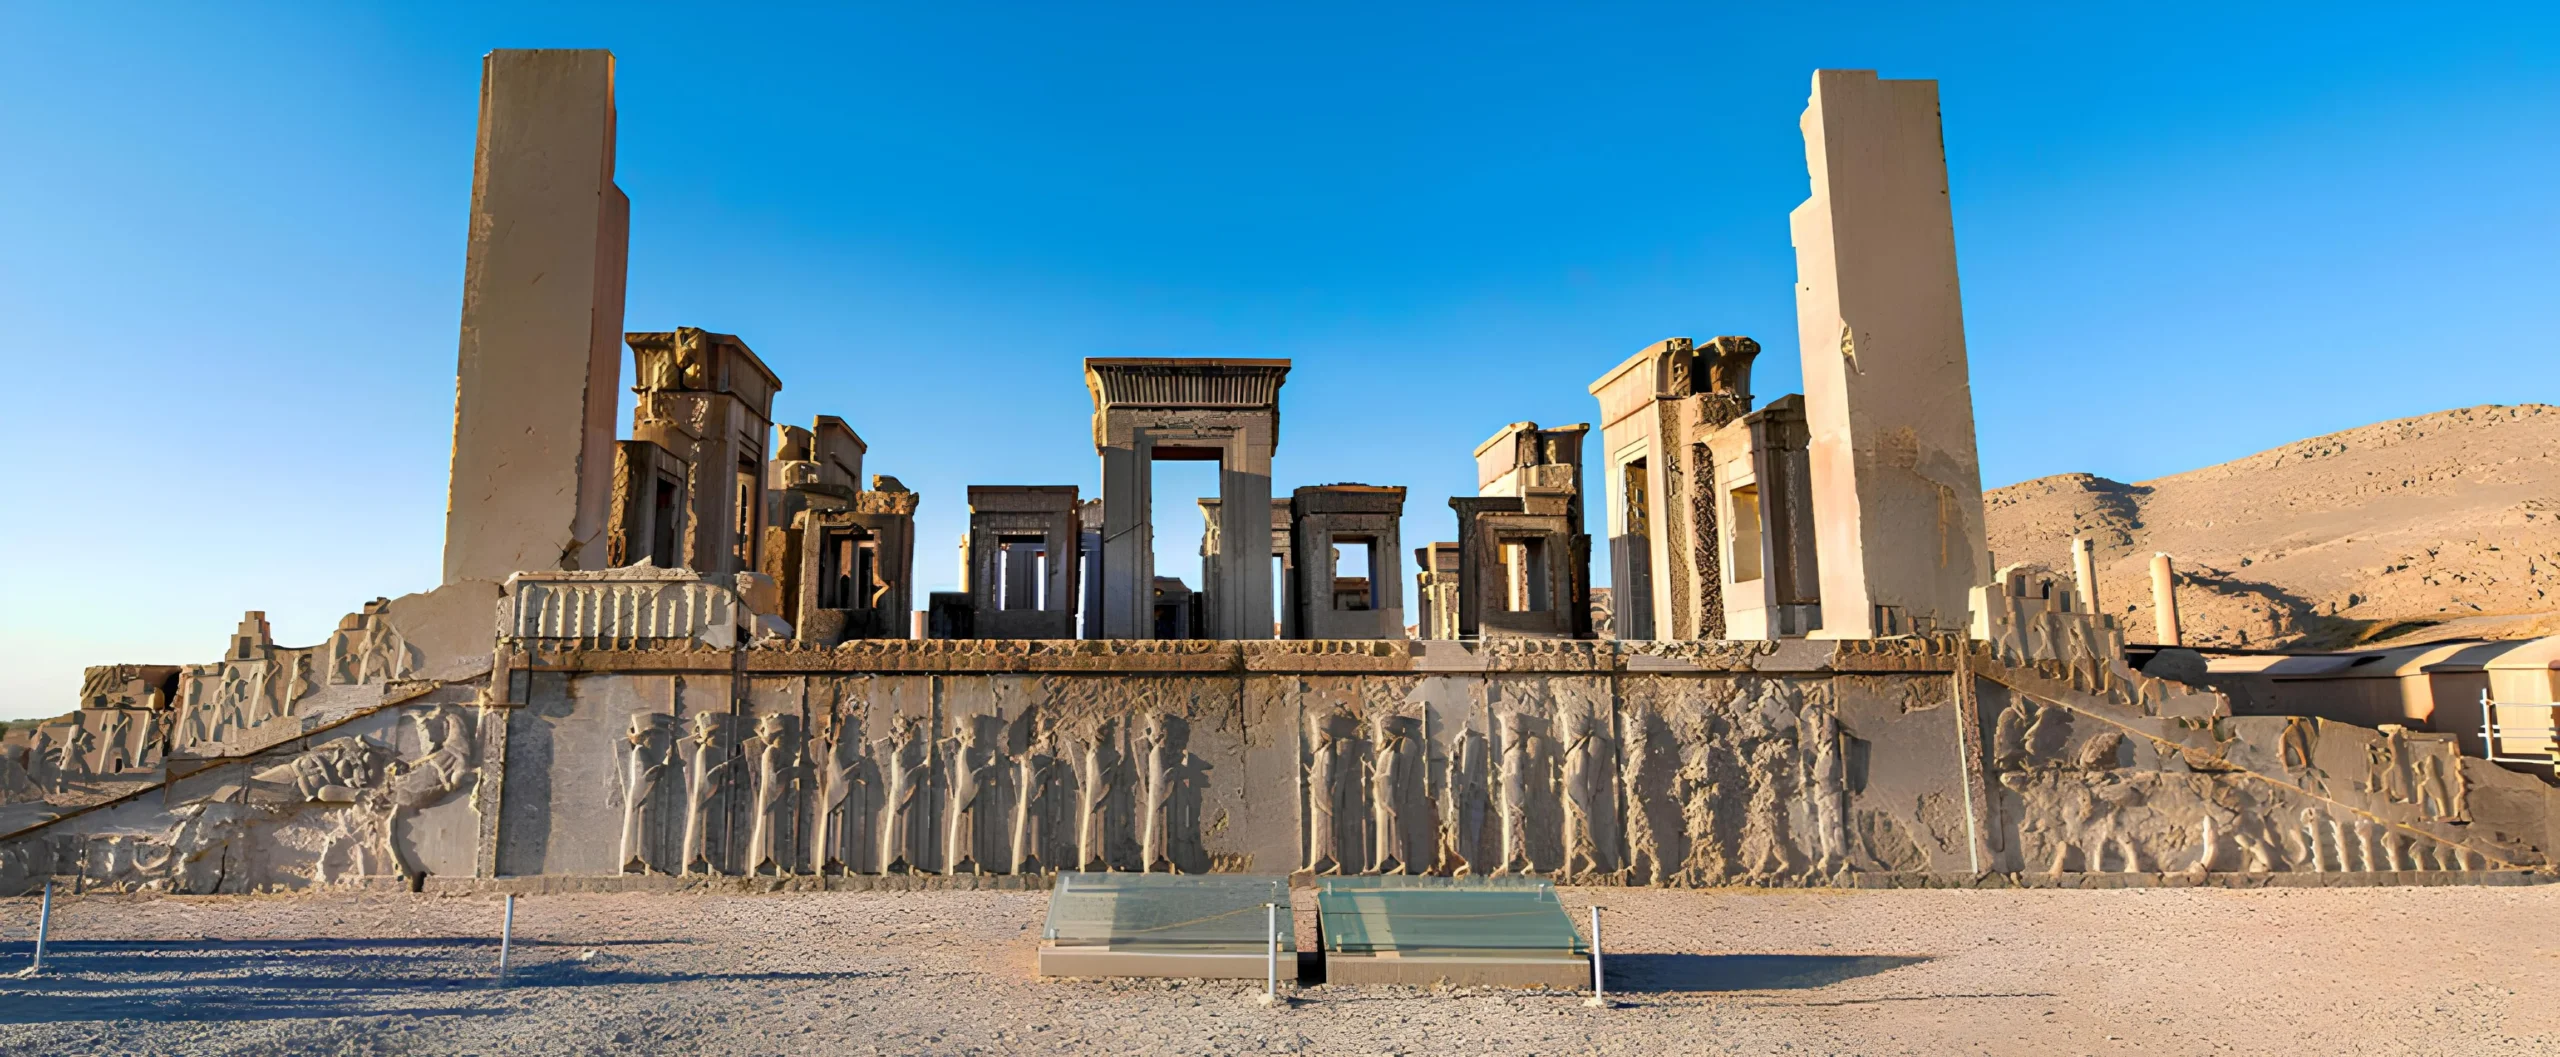 Persepolis The Ancient City